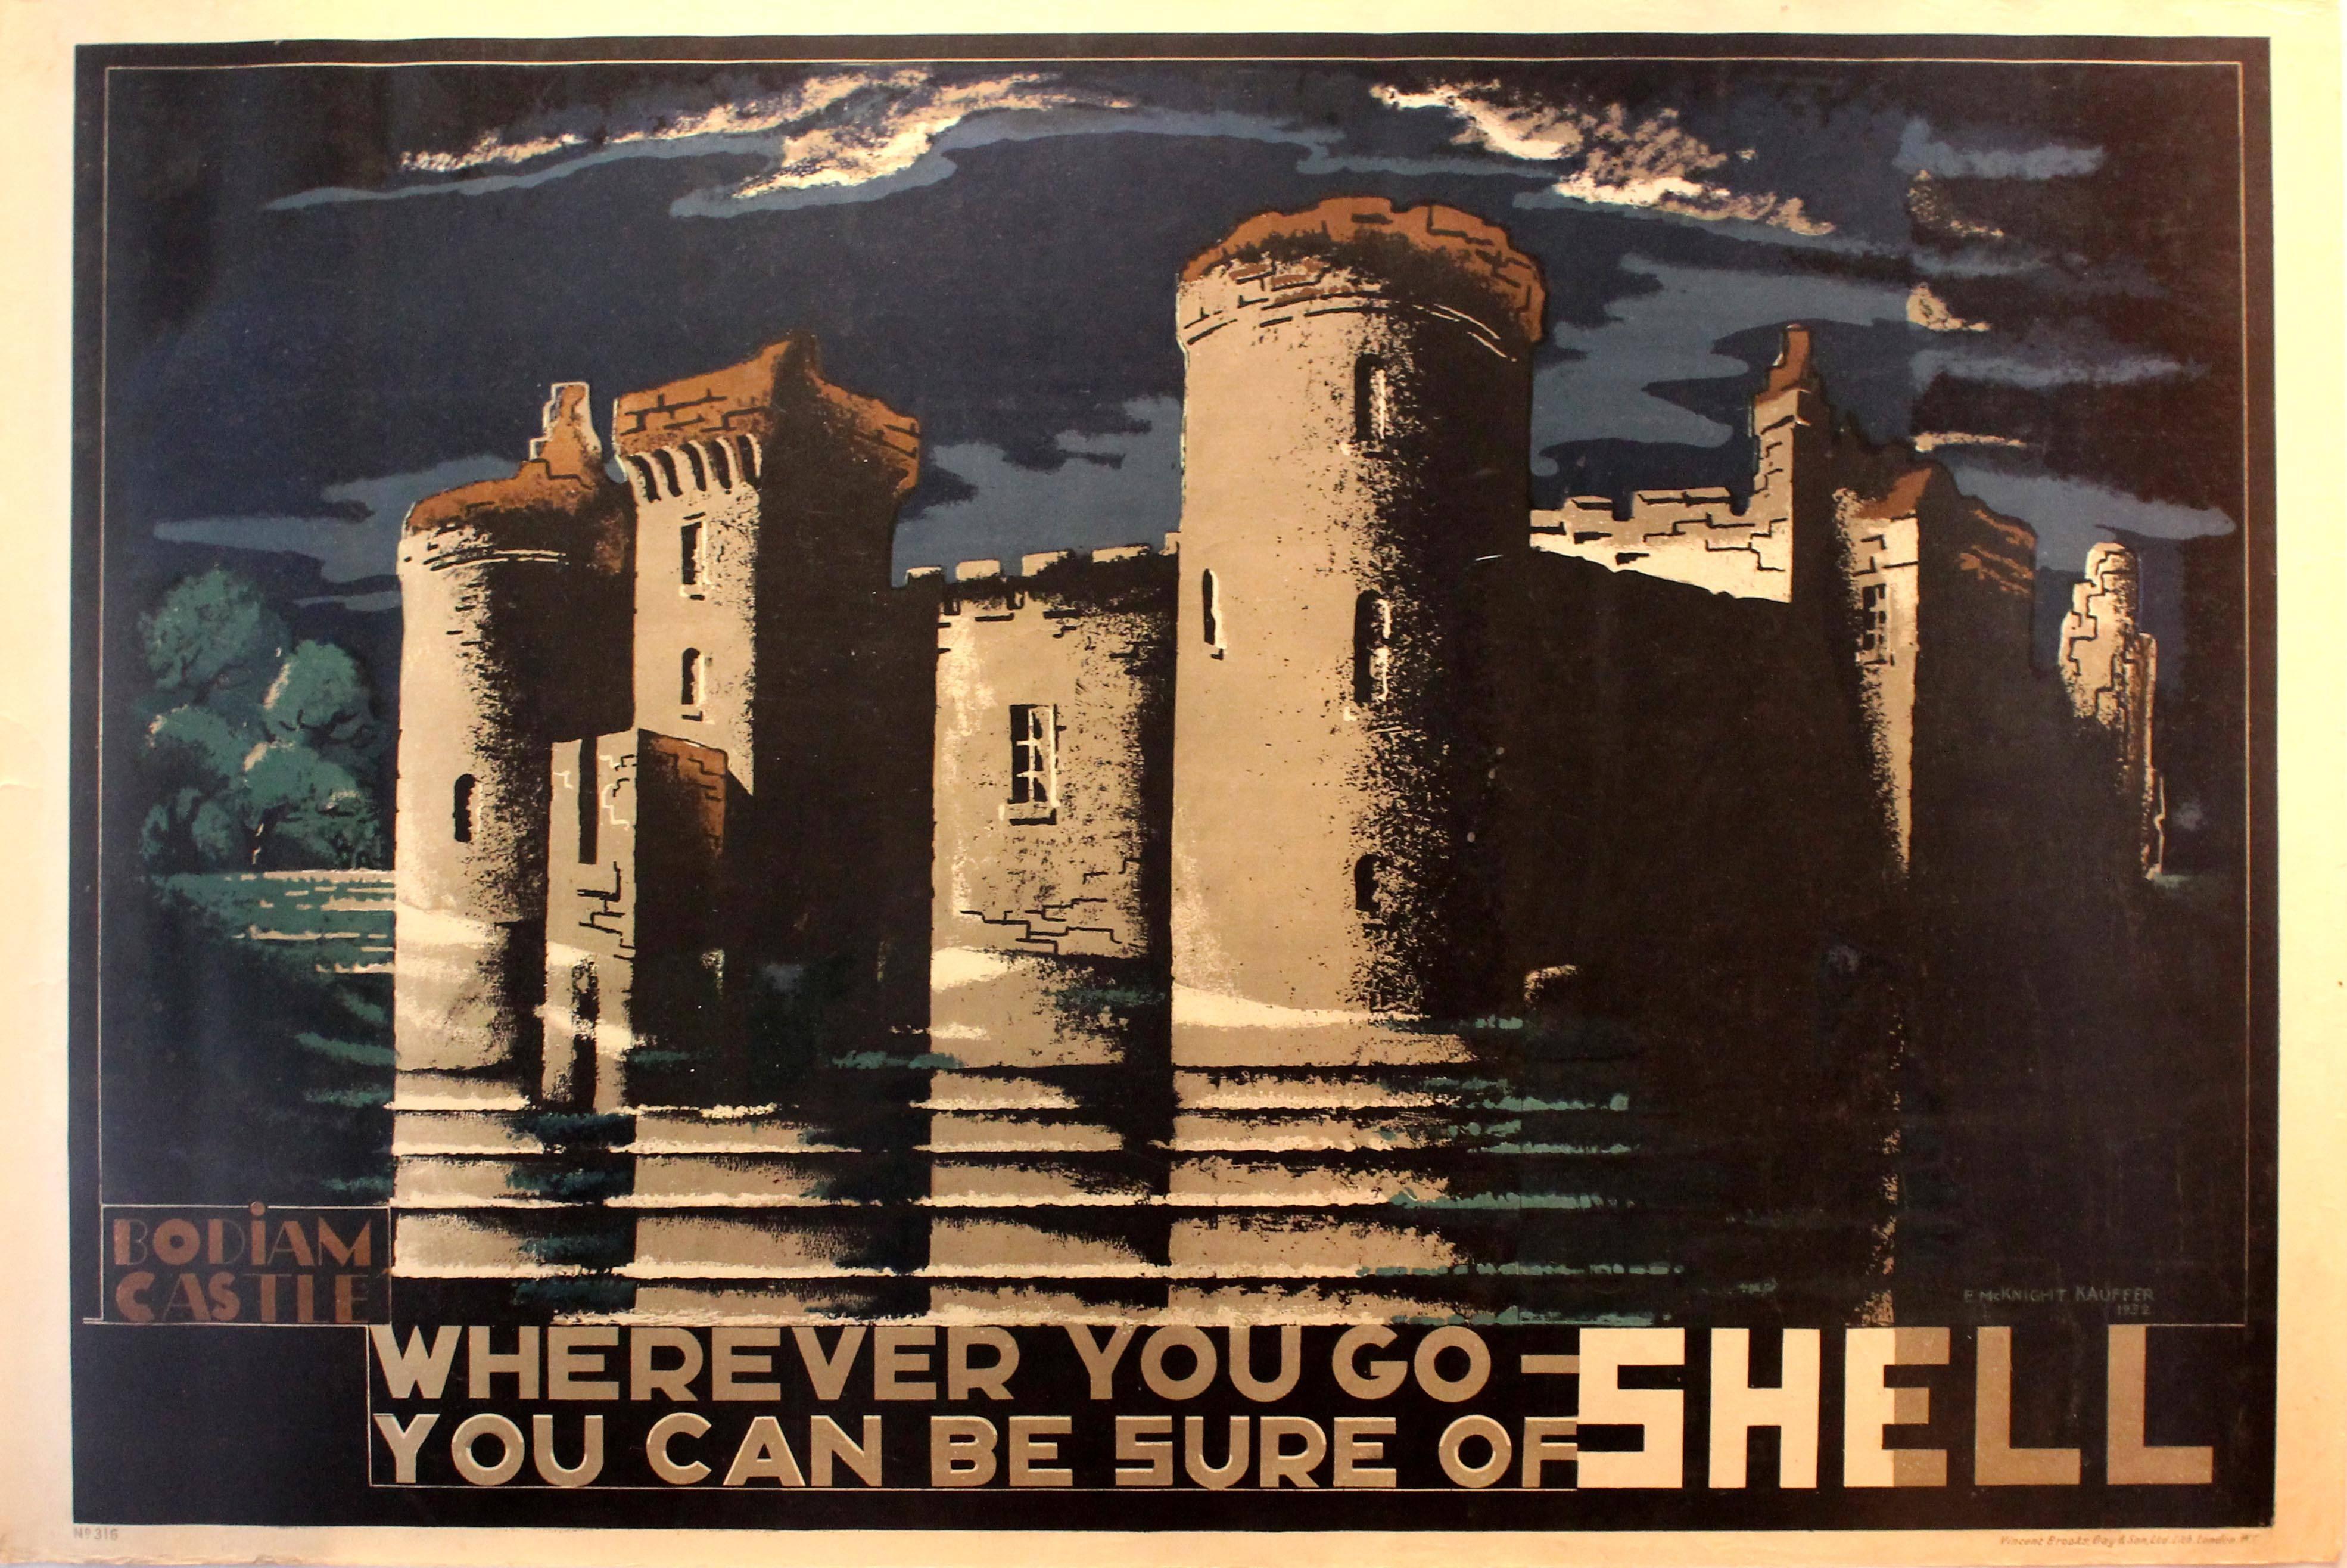 Edward McKnight Kauffer Print - Original Vintage Poster Designed For Shell - Bodiam Castle - By McKnight Kauffer